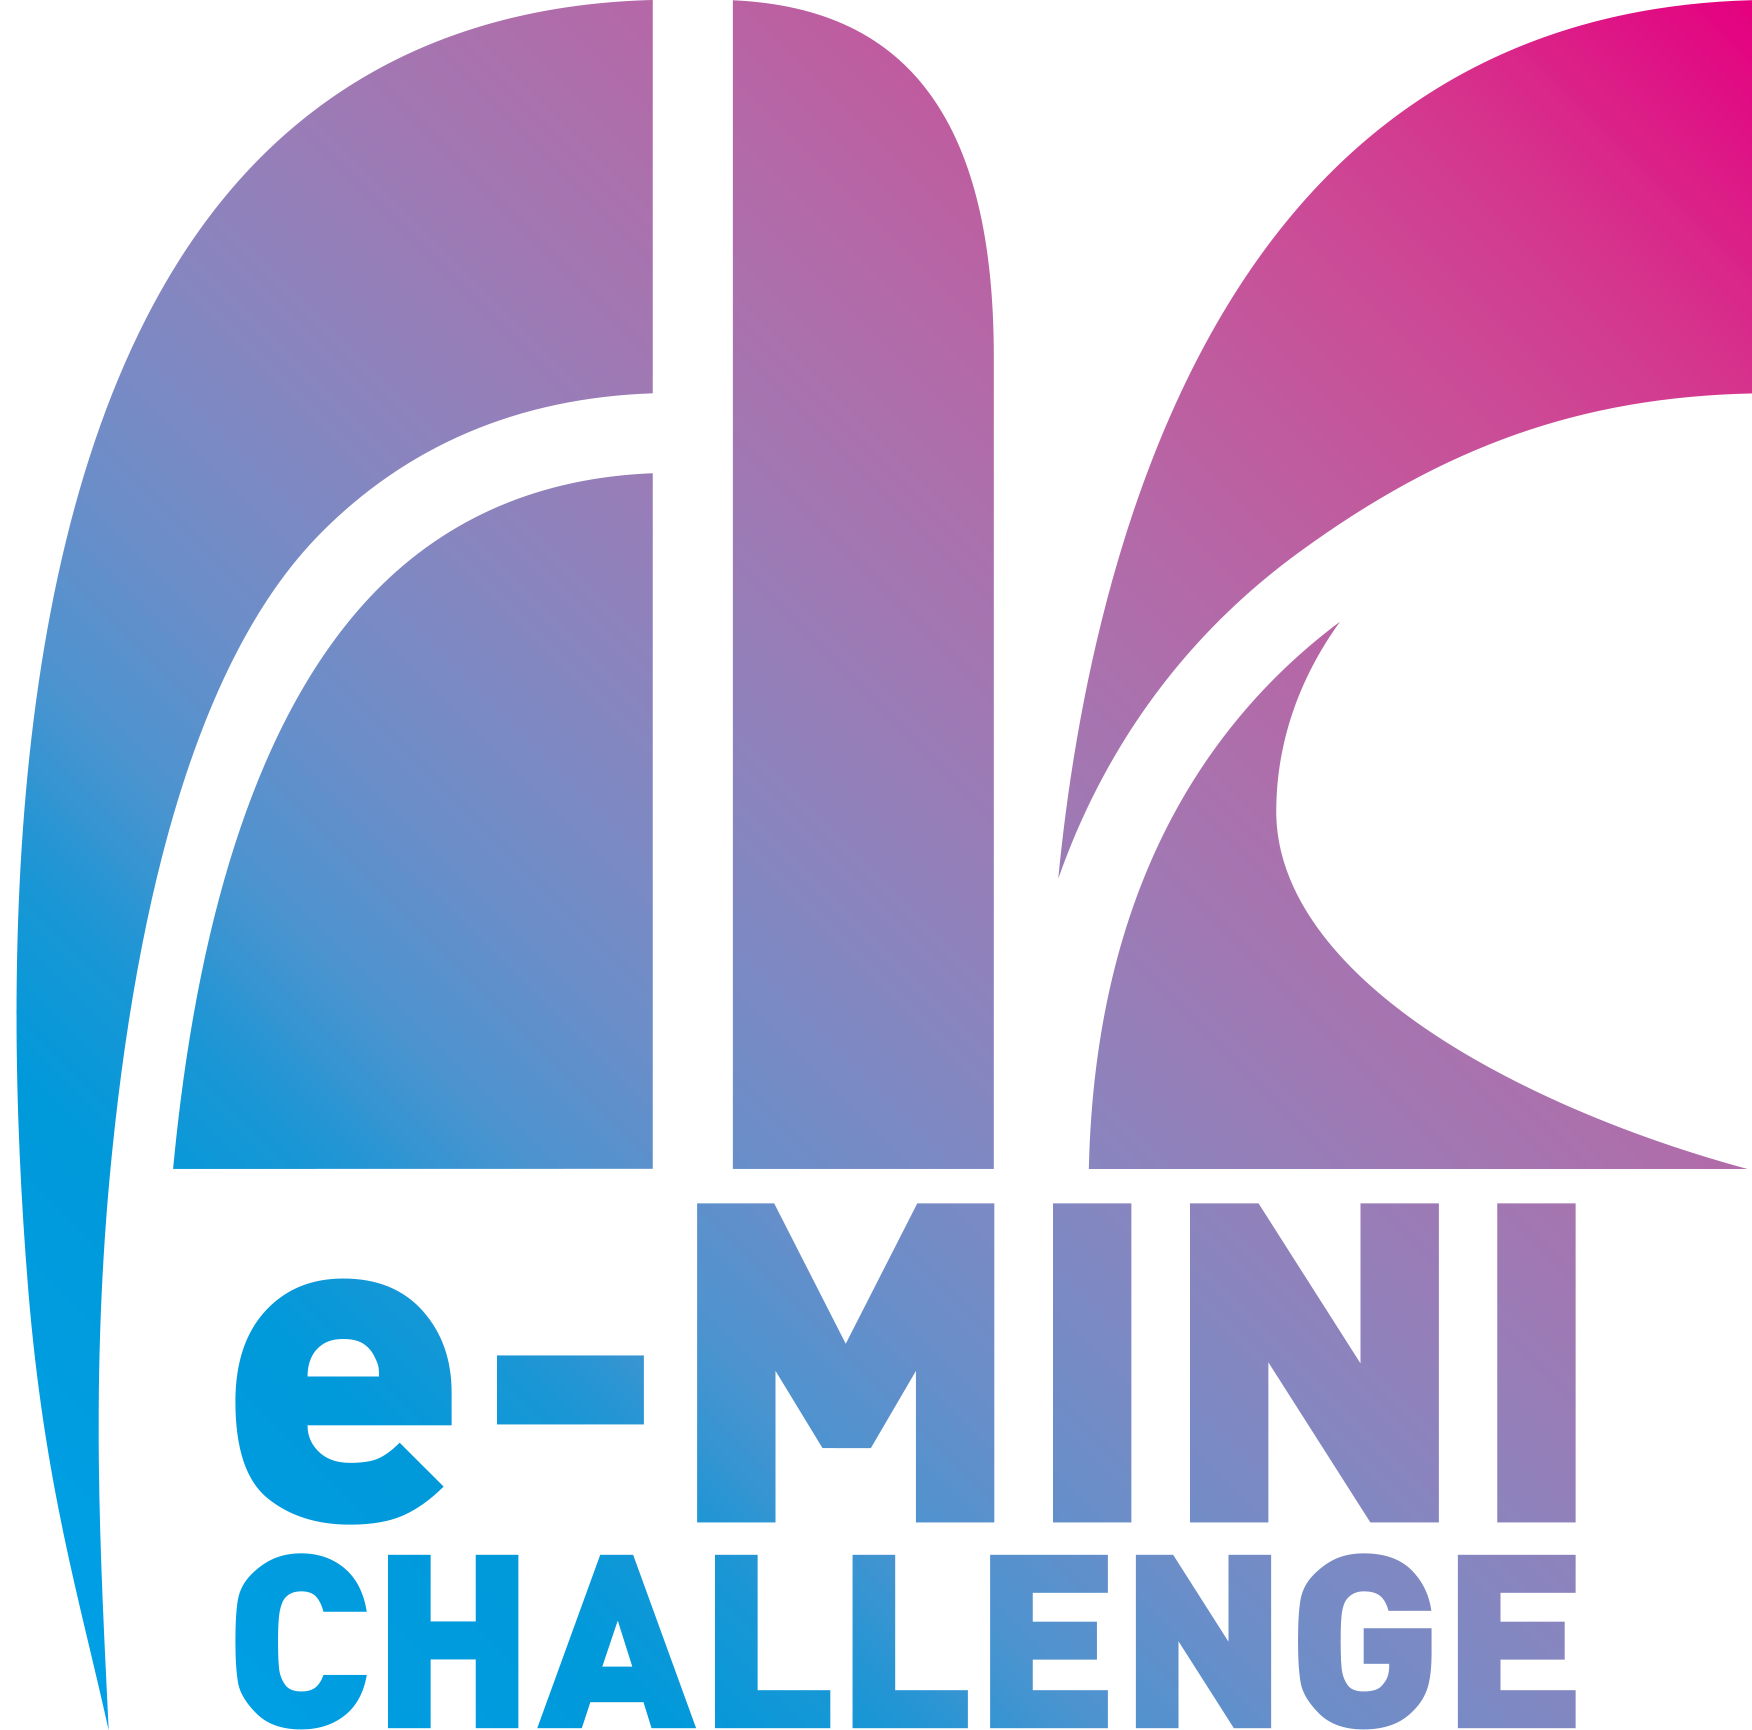 e-MINI CHALLENGE® 2020 S2 Rd.２ ポイントランキング更新